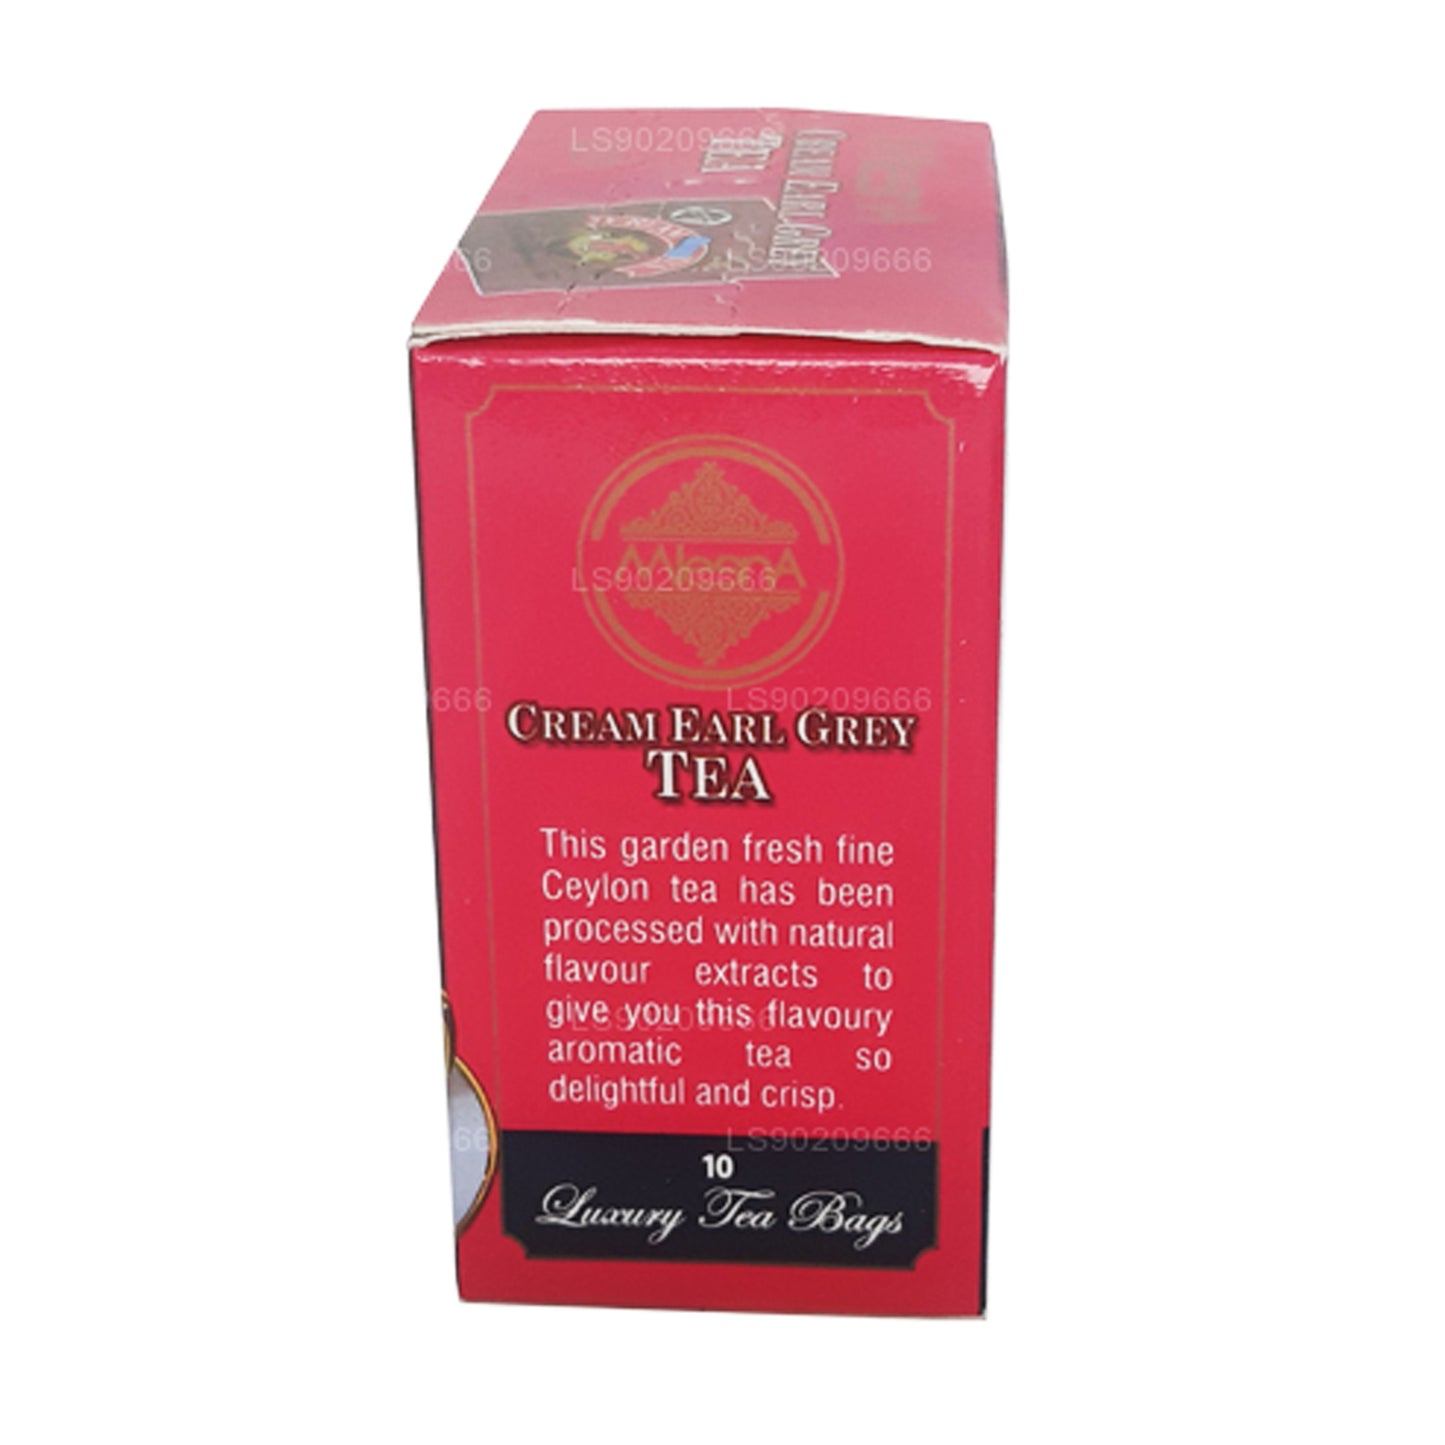 Mlesna Cream Earl Grey Tea (20g) 10 Luxury Tea Bags